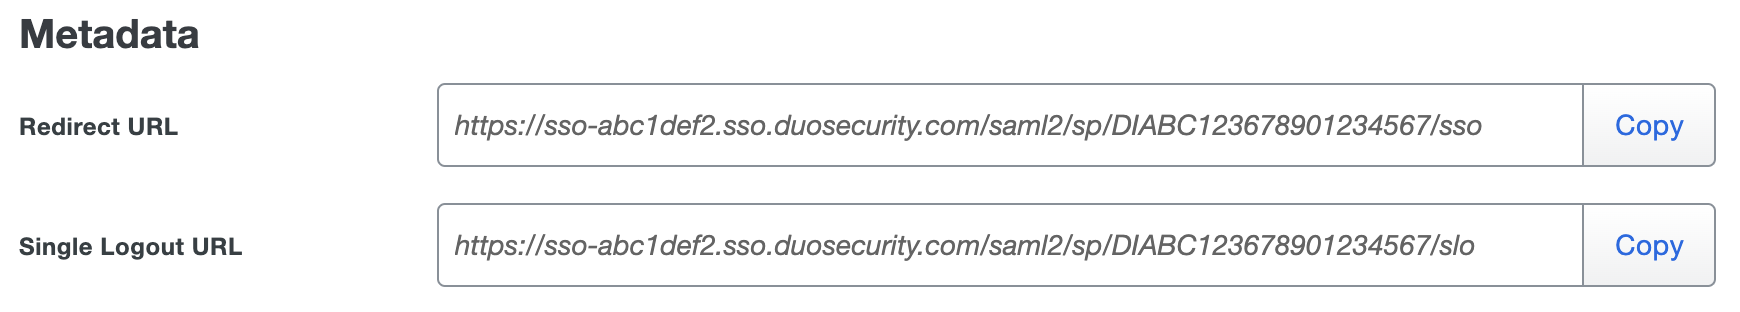 Duo NetScaler Metadata Redirect and Single Logout URLs